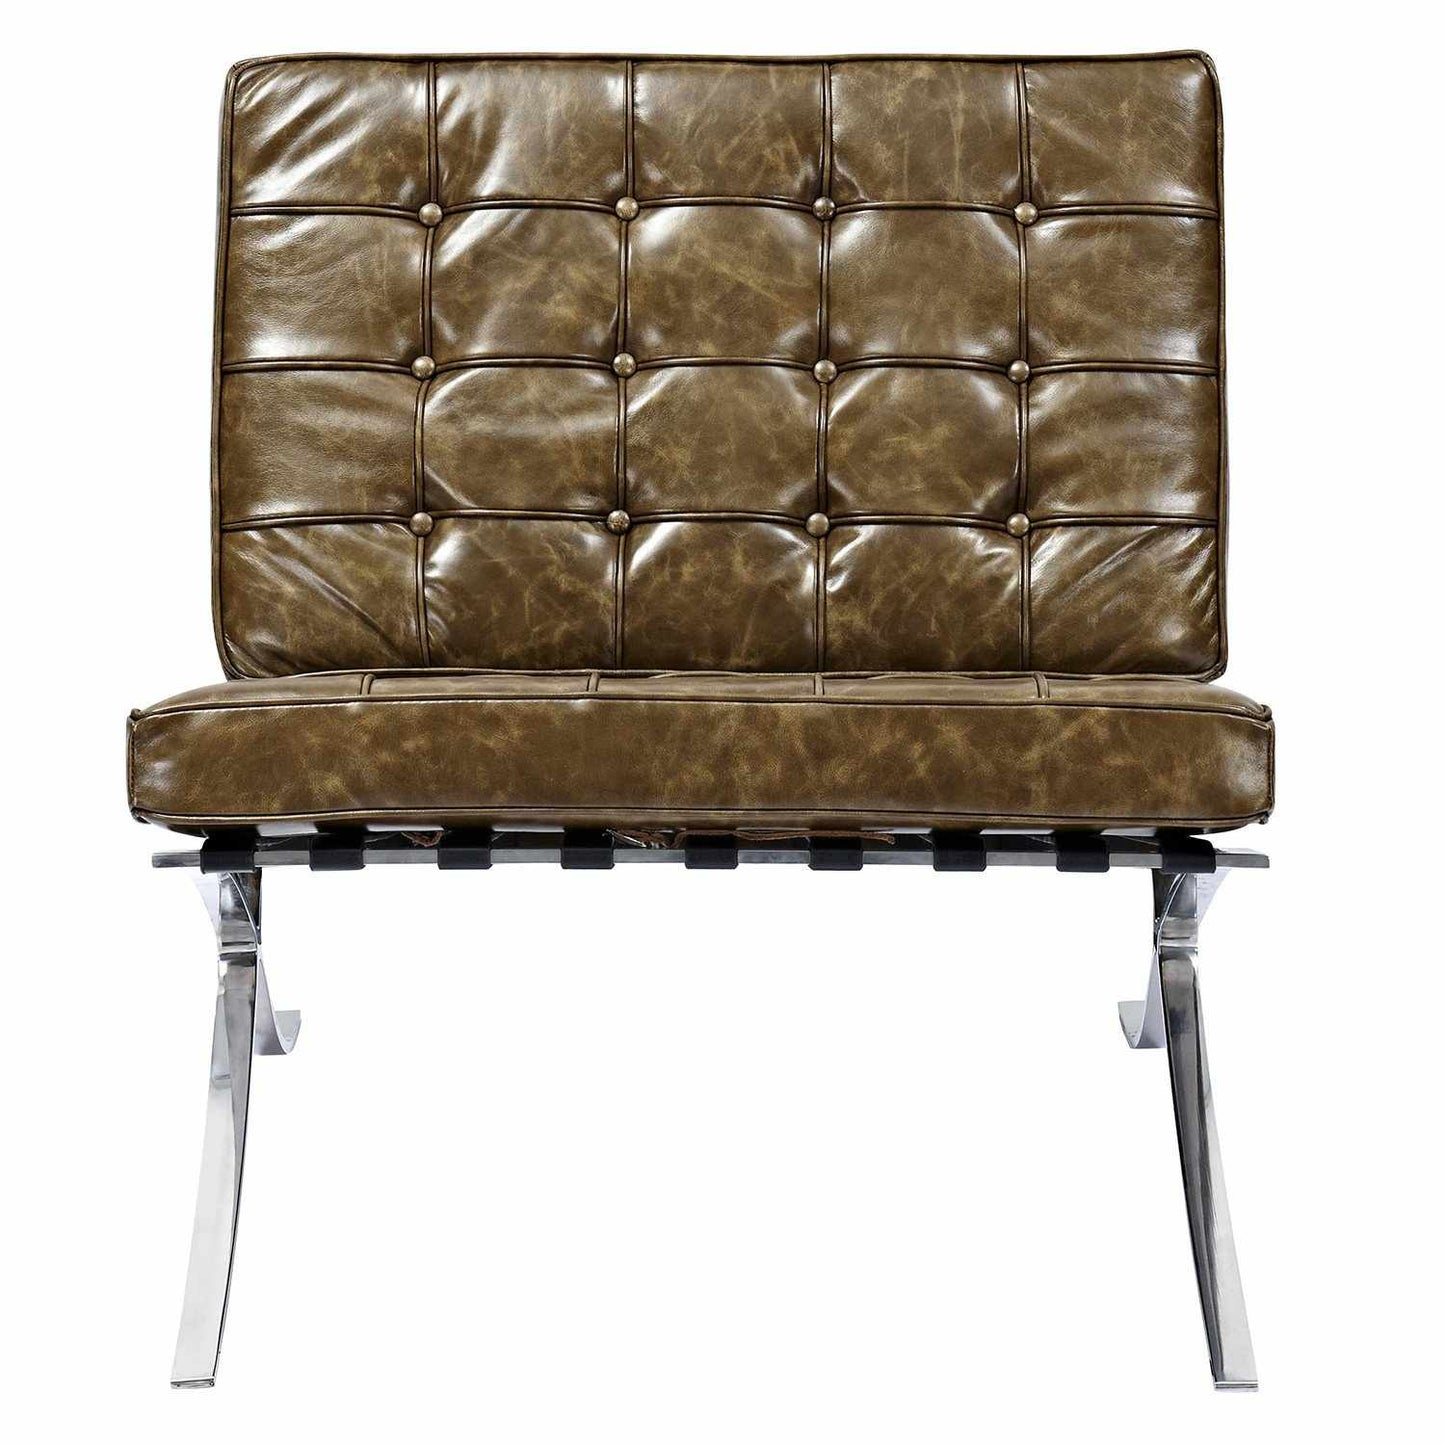 Barcelona Style Chair & Ottoman - living-essentials